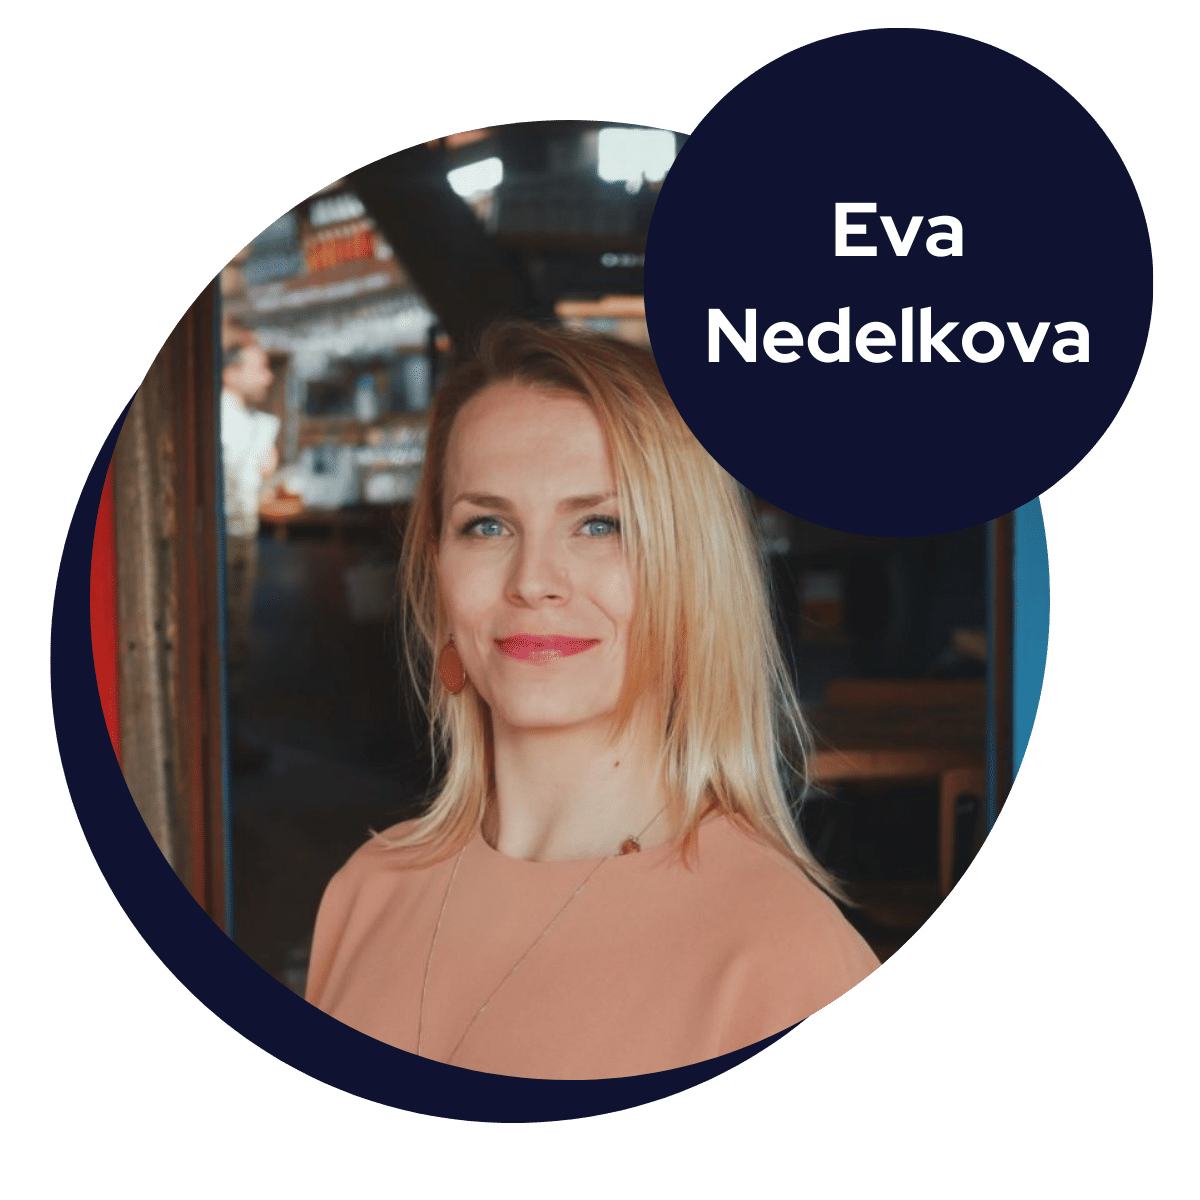 Eva Nedelkova